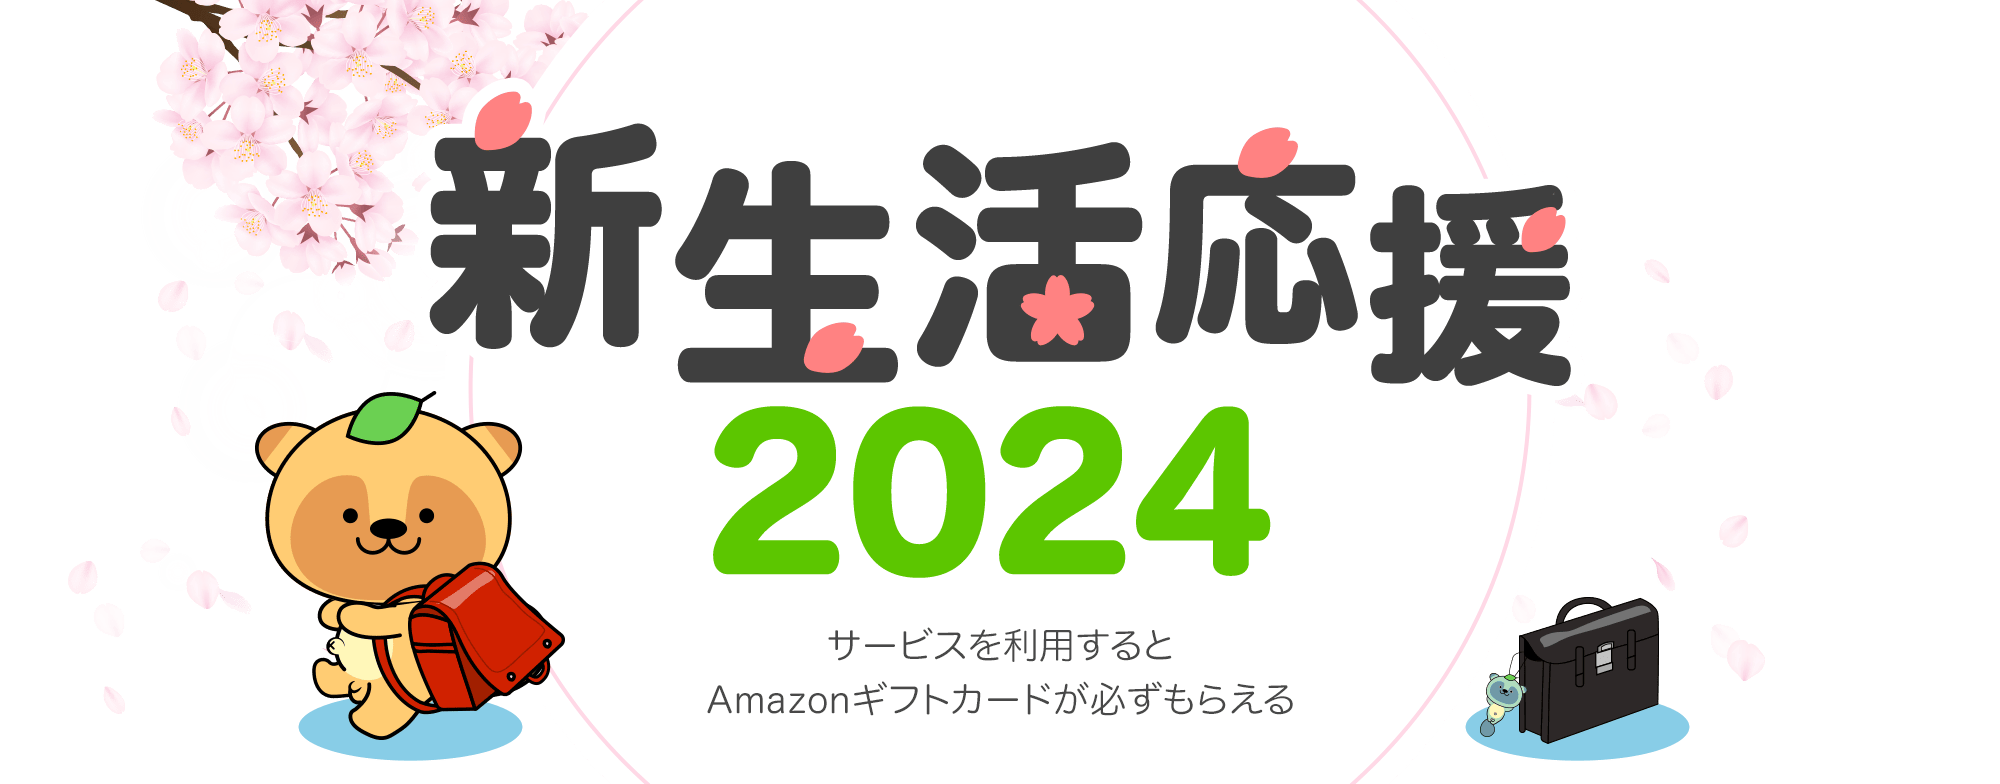 ドリームメール特別企画「新生活応援特集2024」